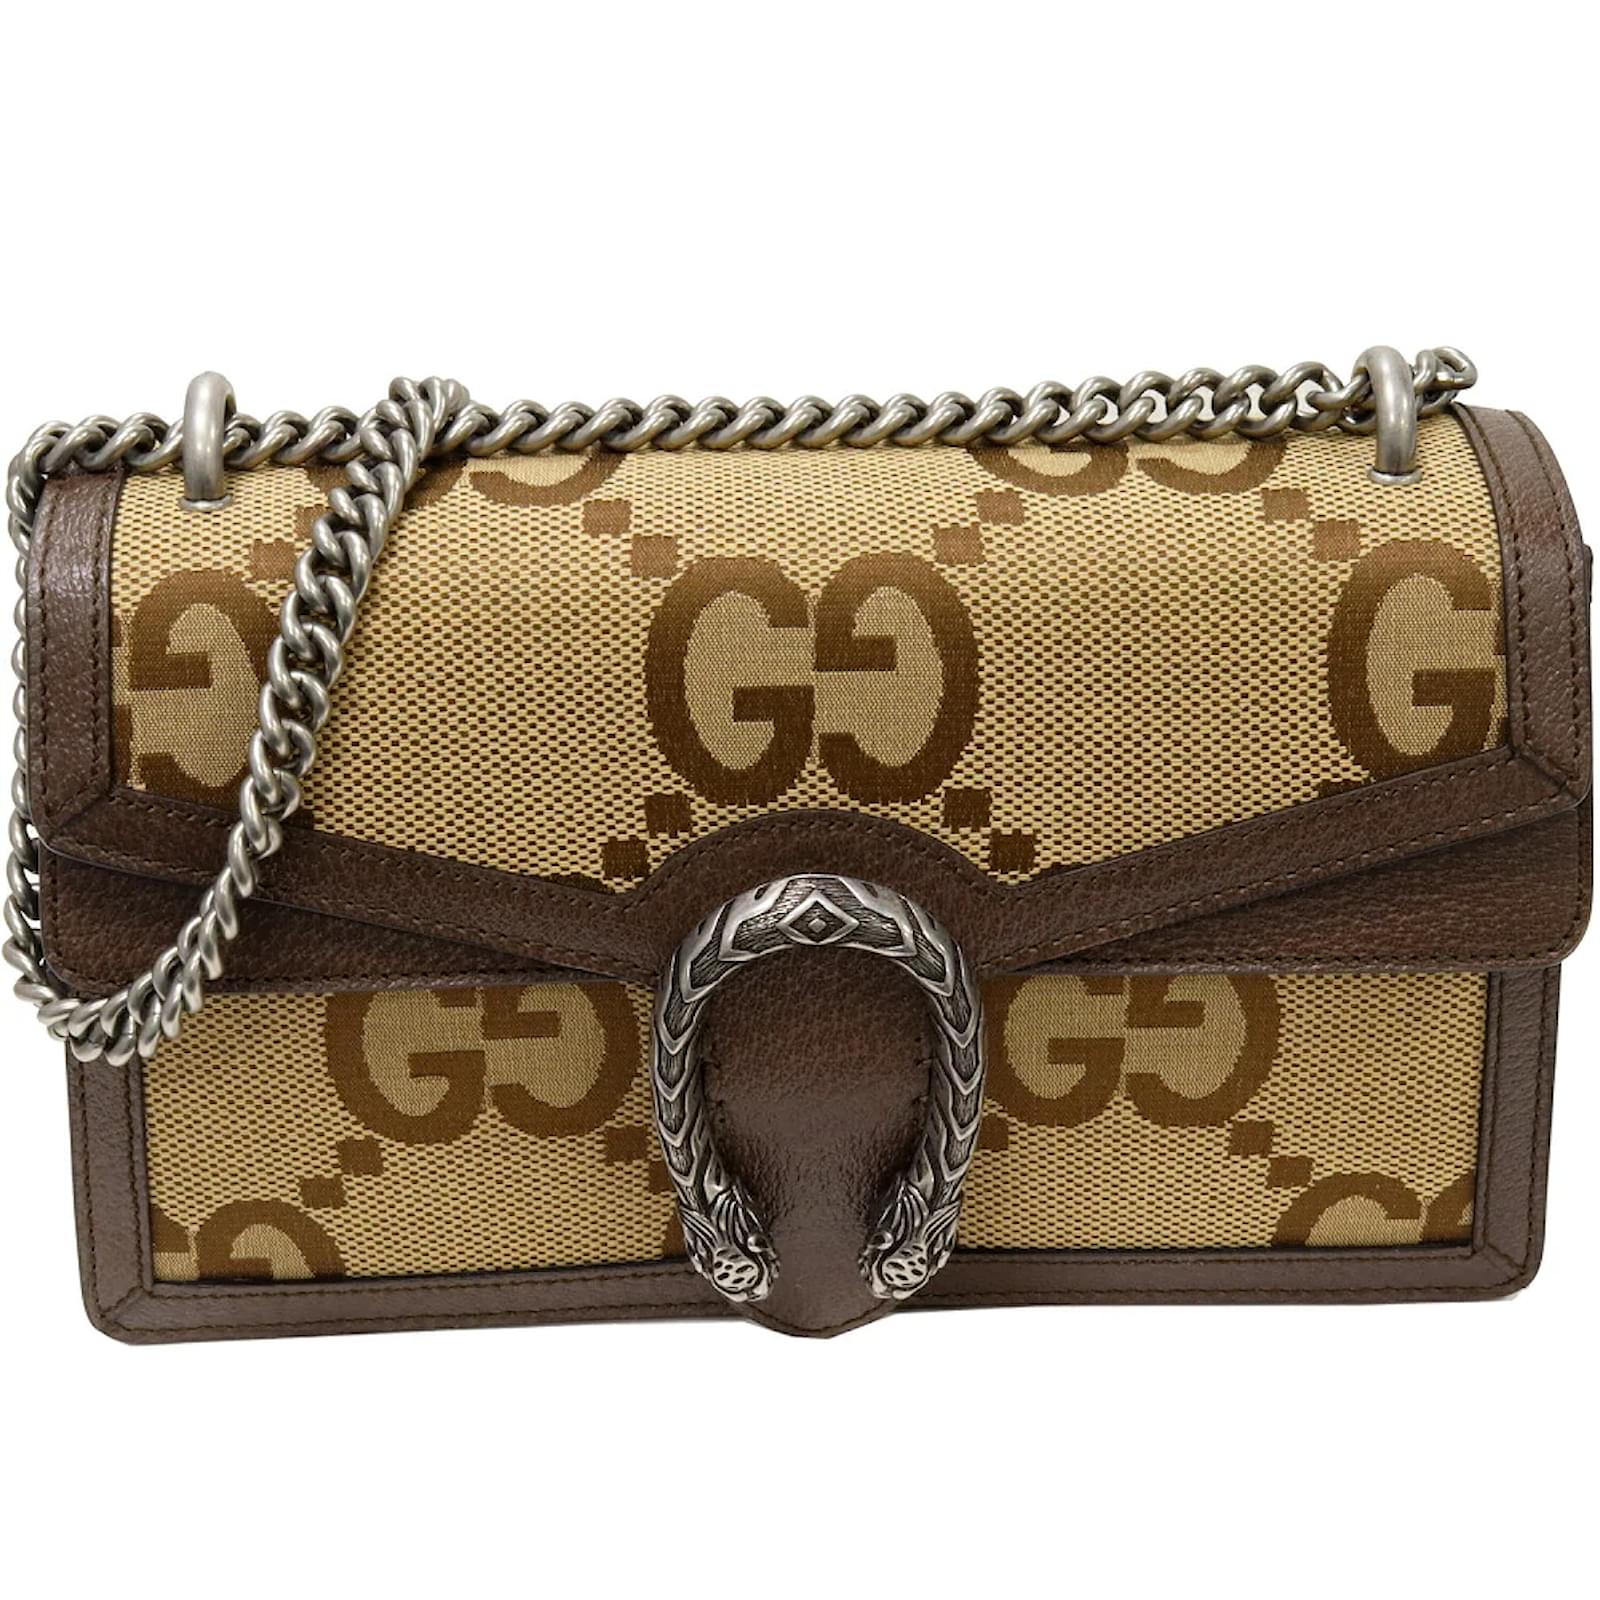 Gucci Dionysus Guccify Bag